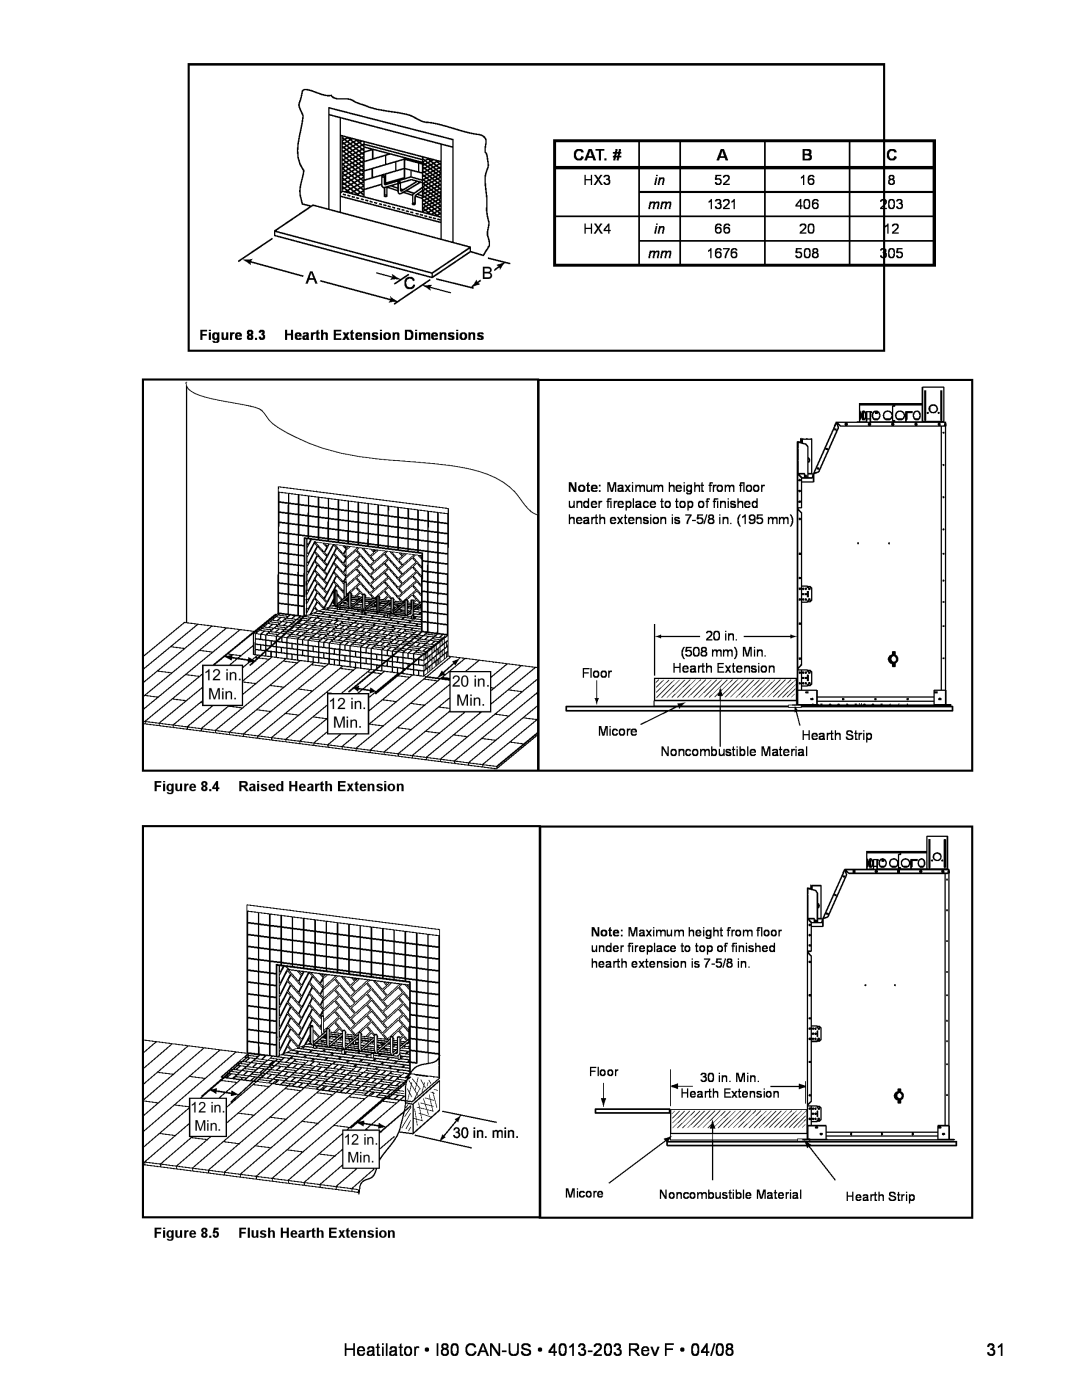 Heatiator Heatilator I80 CAN-US 4013-203Rev F 04/08, Cat. #, 3 Hearth Extension Dimensions, 4 Raised Hearth Extension 